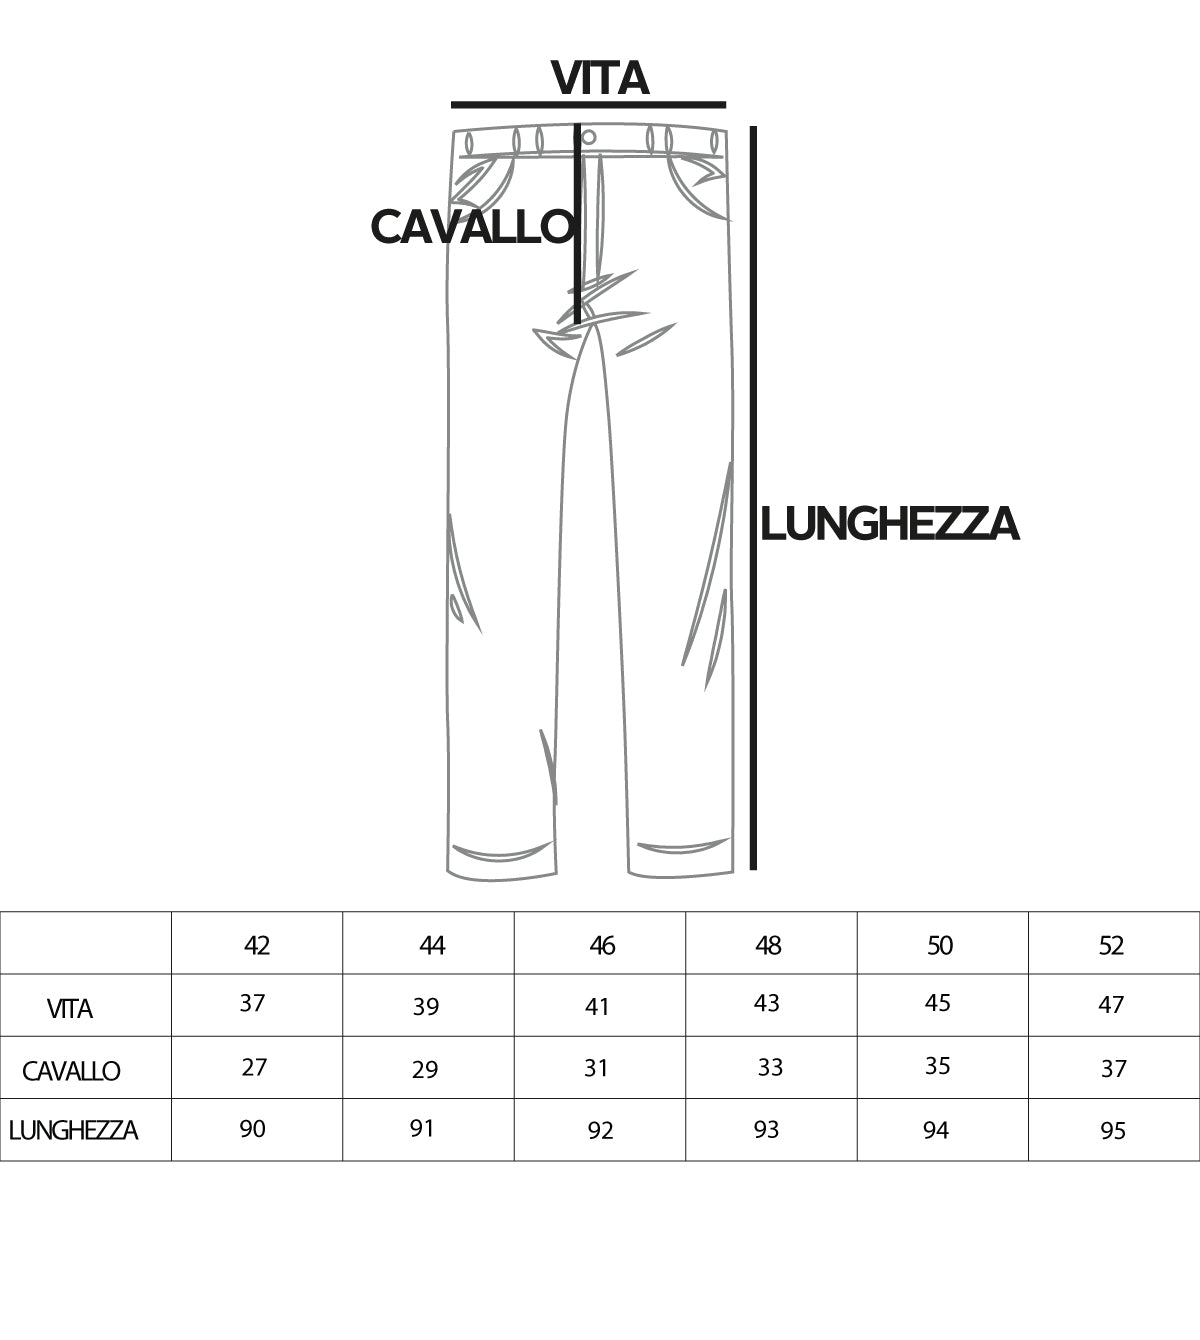 Pantaloni Jeans Uomo Loose Fit Panna Con Rotture Cinque Tasche Casual GIOSAL-P3280A